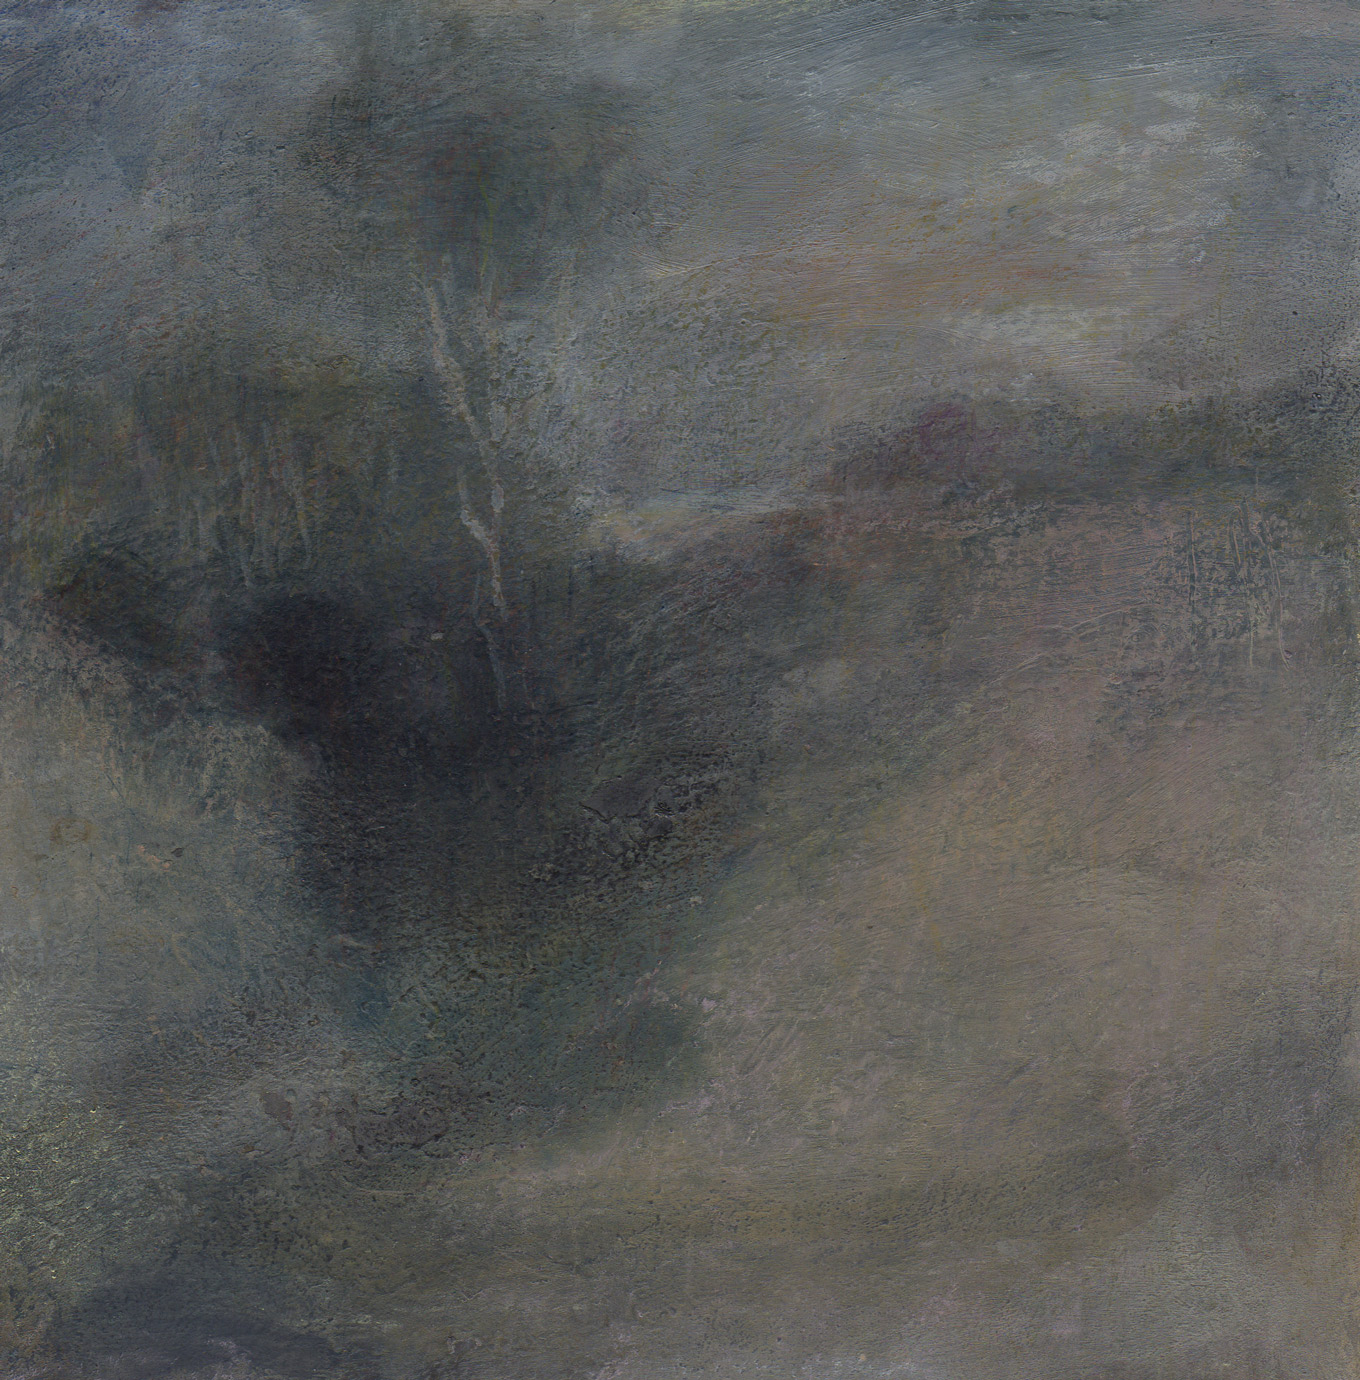 L1167 - Nicholas Herbert, British Artist, mixed media landscape painting of a solitary tree on an escarpment slope, 2019